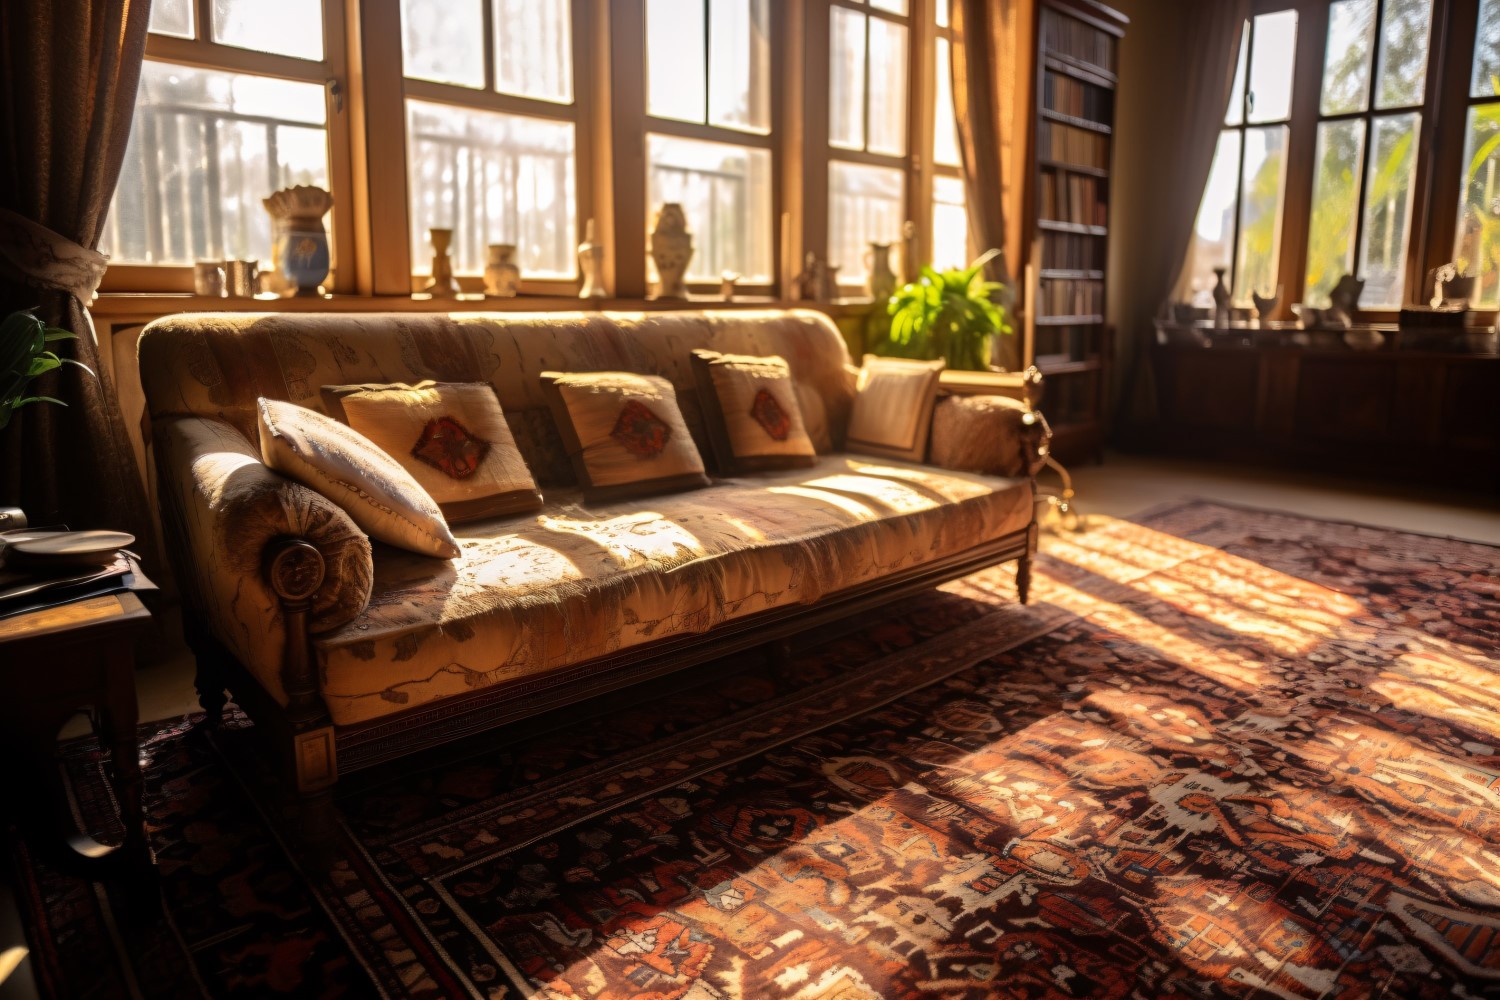 Elegance Redefined An Italian Living Room Oasis 961